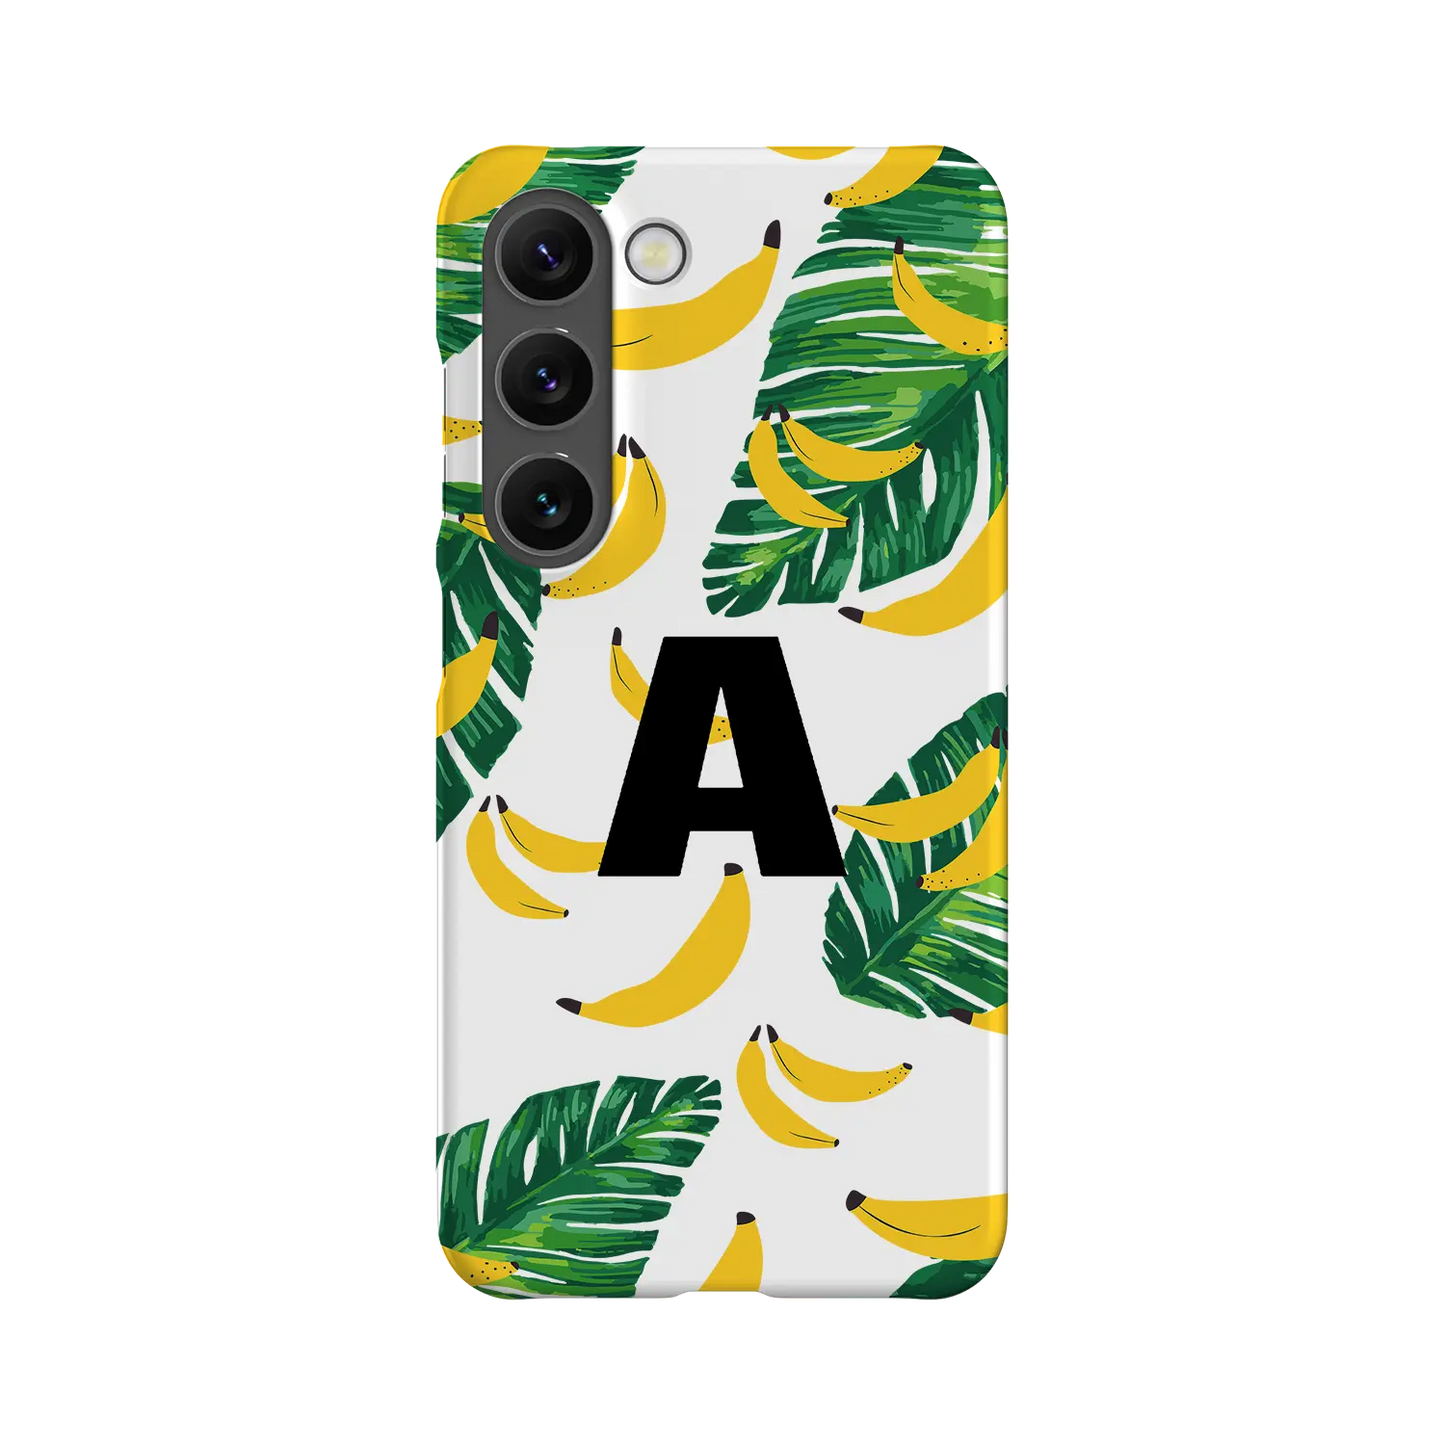 Going Bananas - Carcasa personalizada Galaxy S